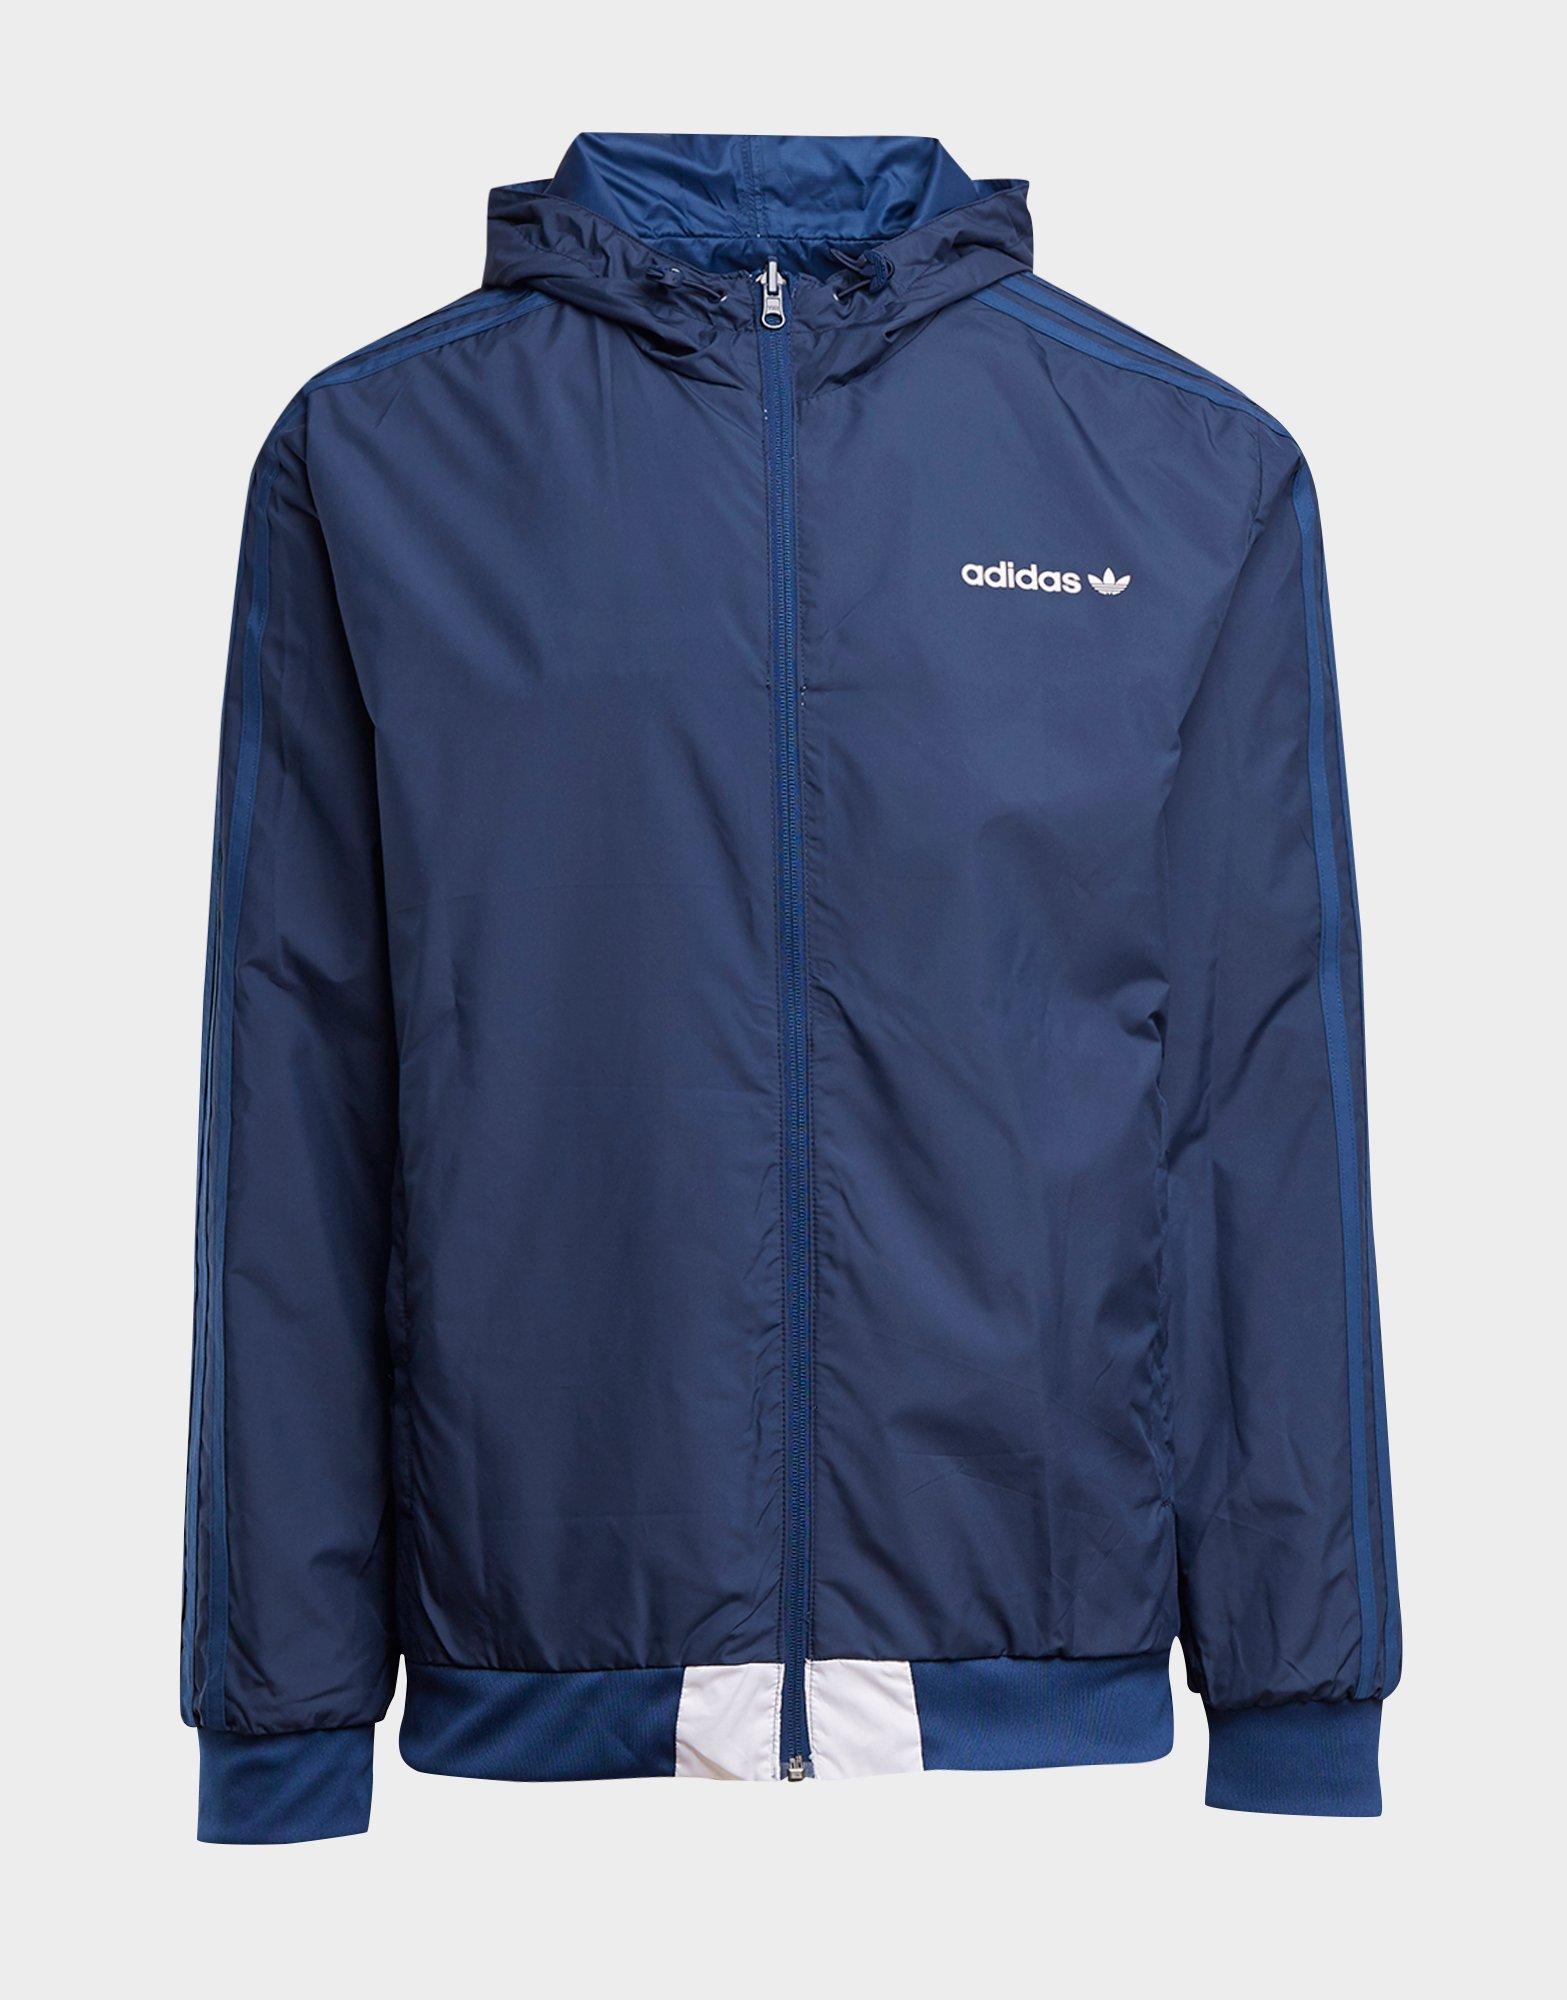 adidas men's windbreaker 2.0 jacket